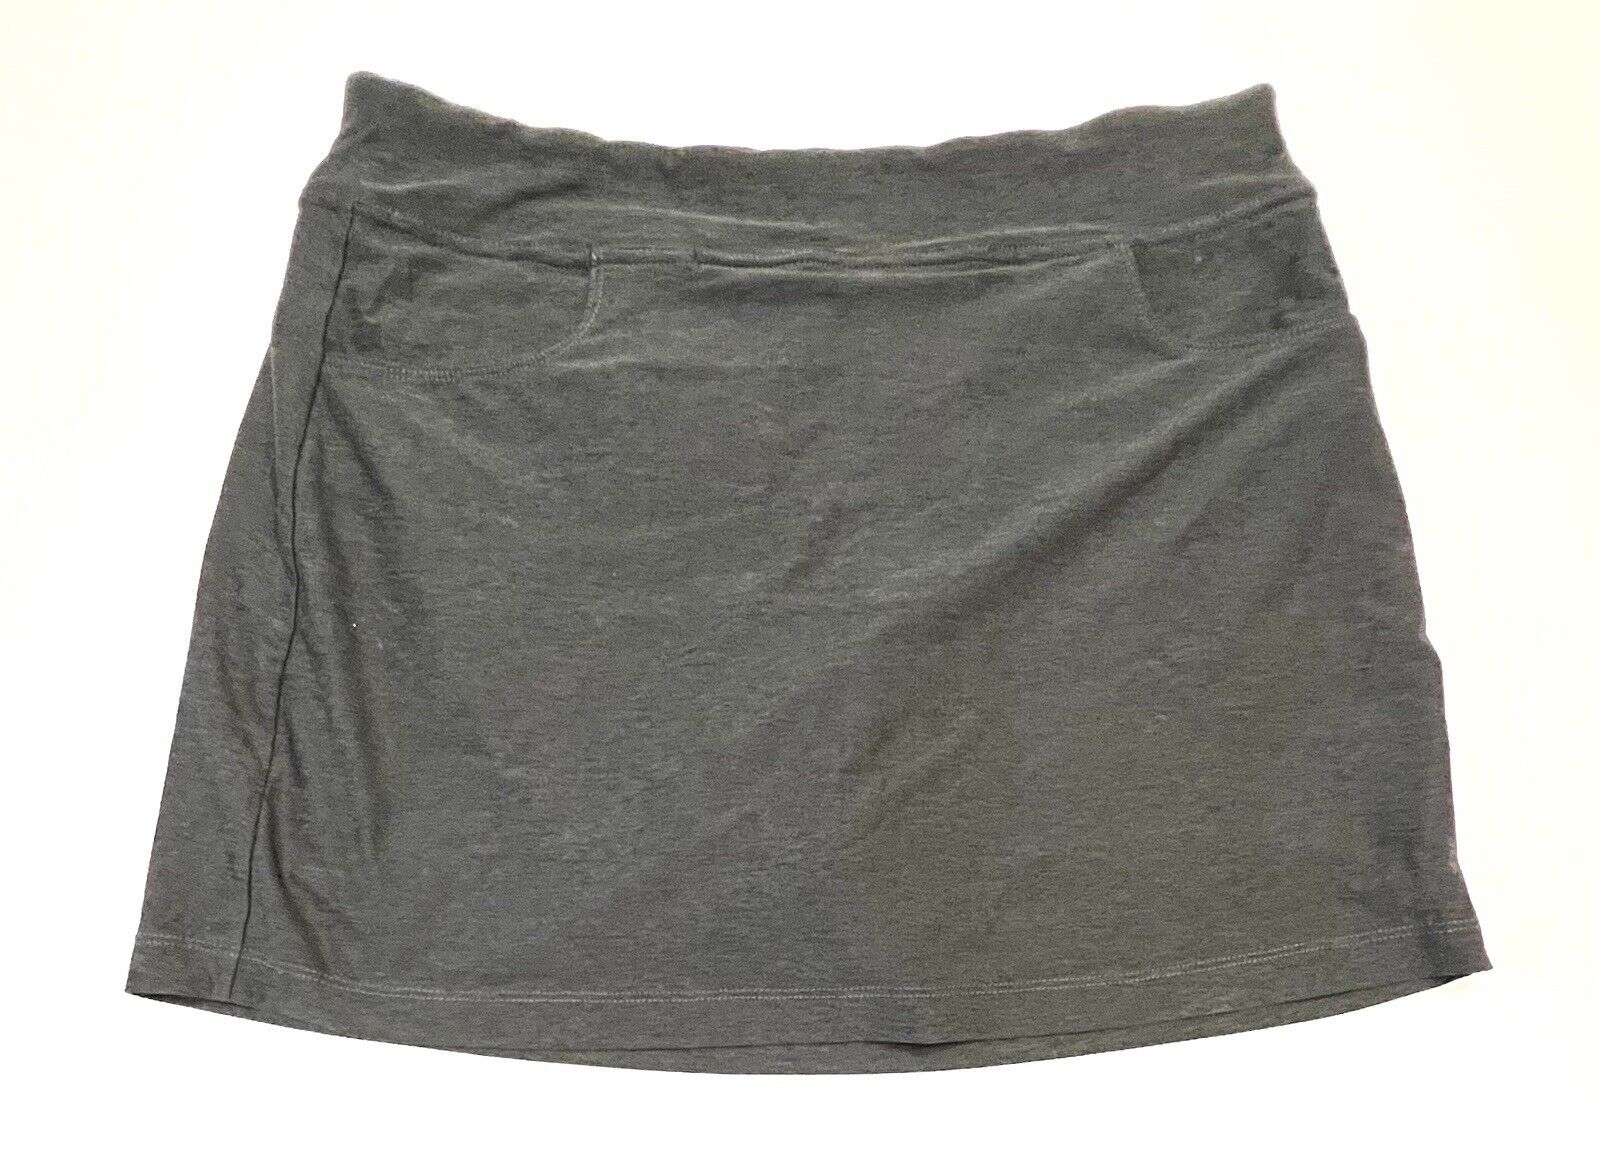 Pga Tour Golf Tennis Skort Gray Size Medium Shorts Skirt Motionflux 360